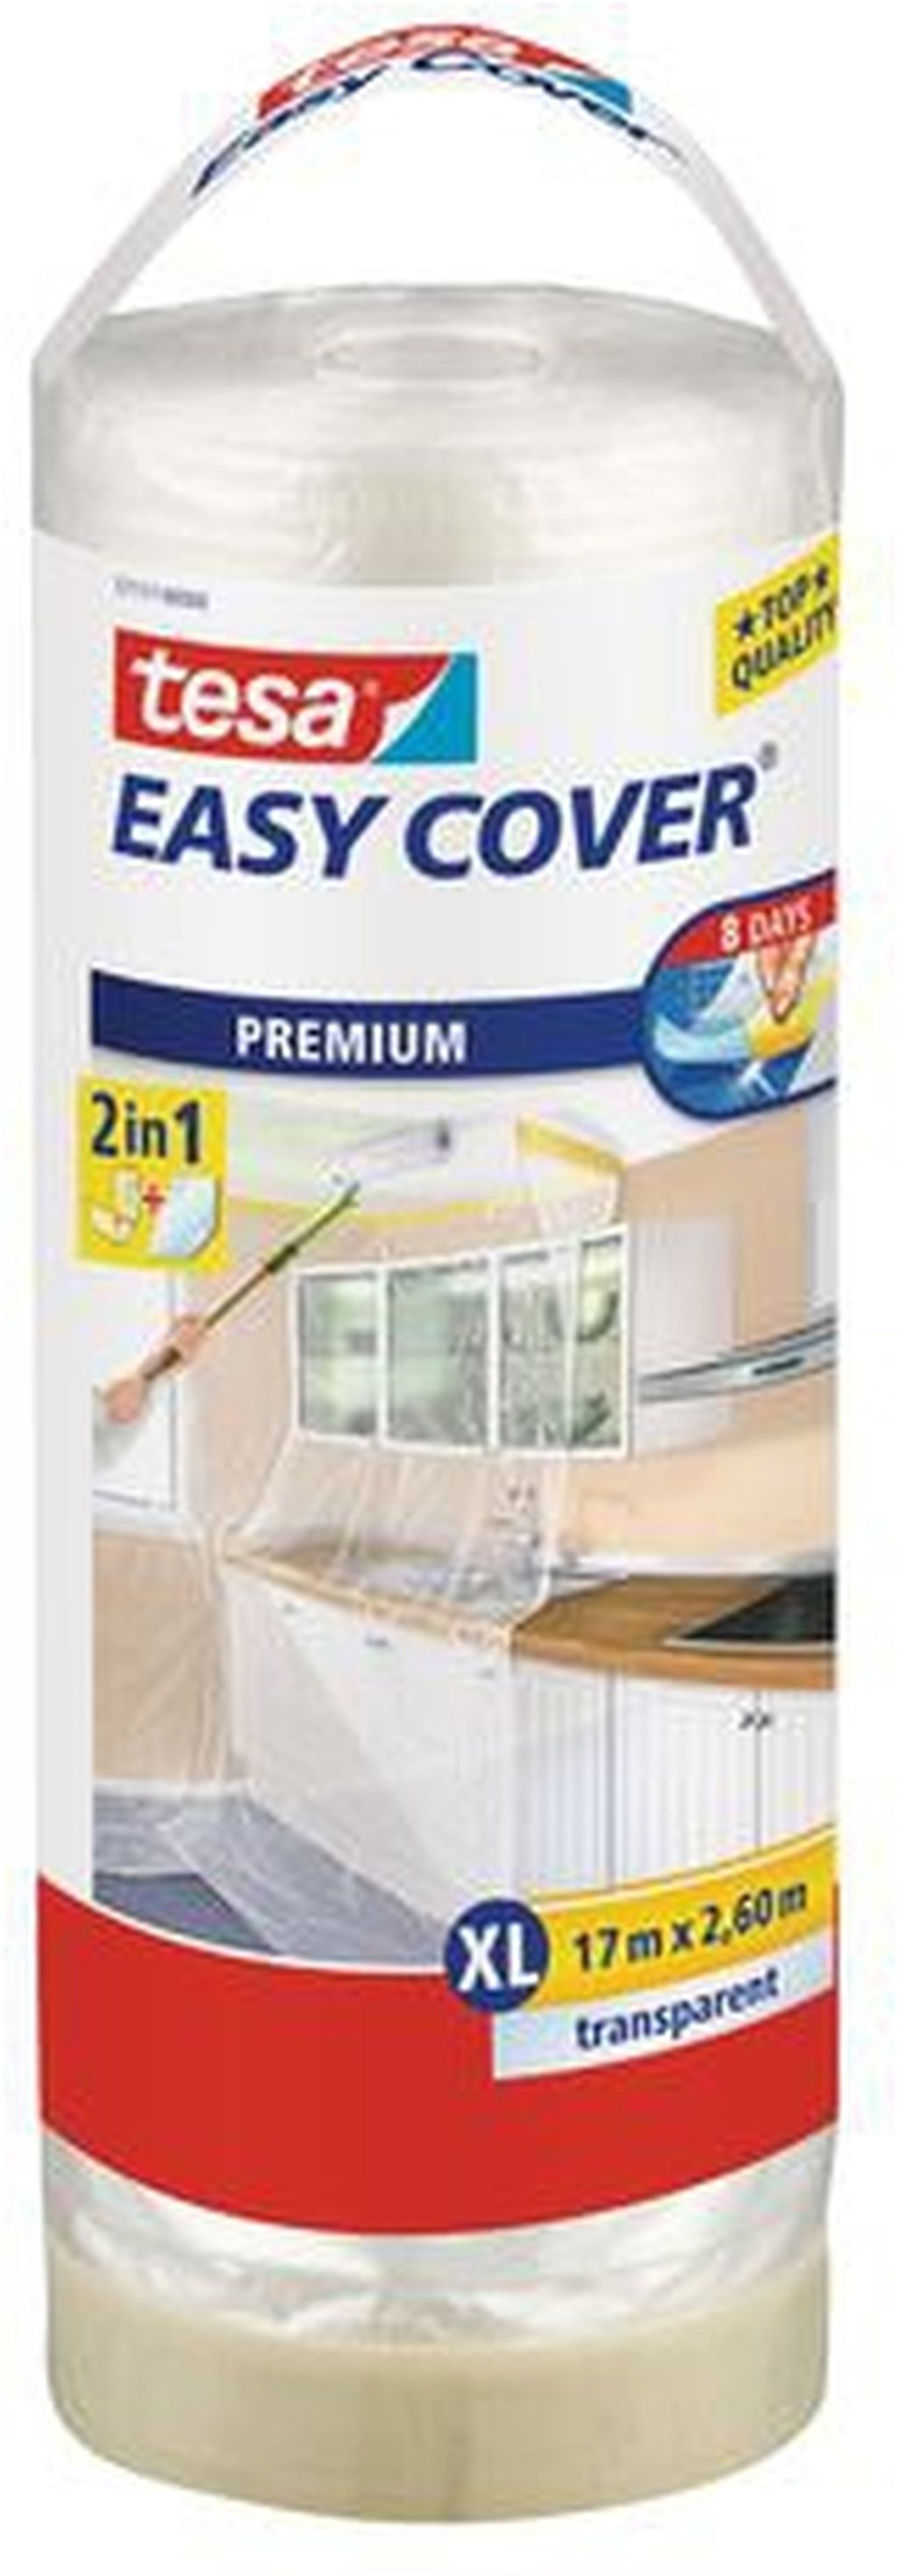 TESA Easy Cover zakrývací fólie, malířská páska a náplň 17m x 2,6m 57117-00000-03